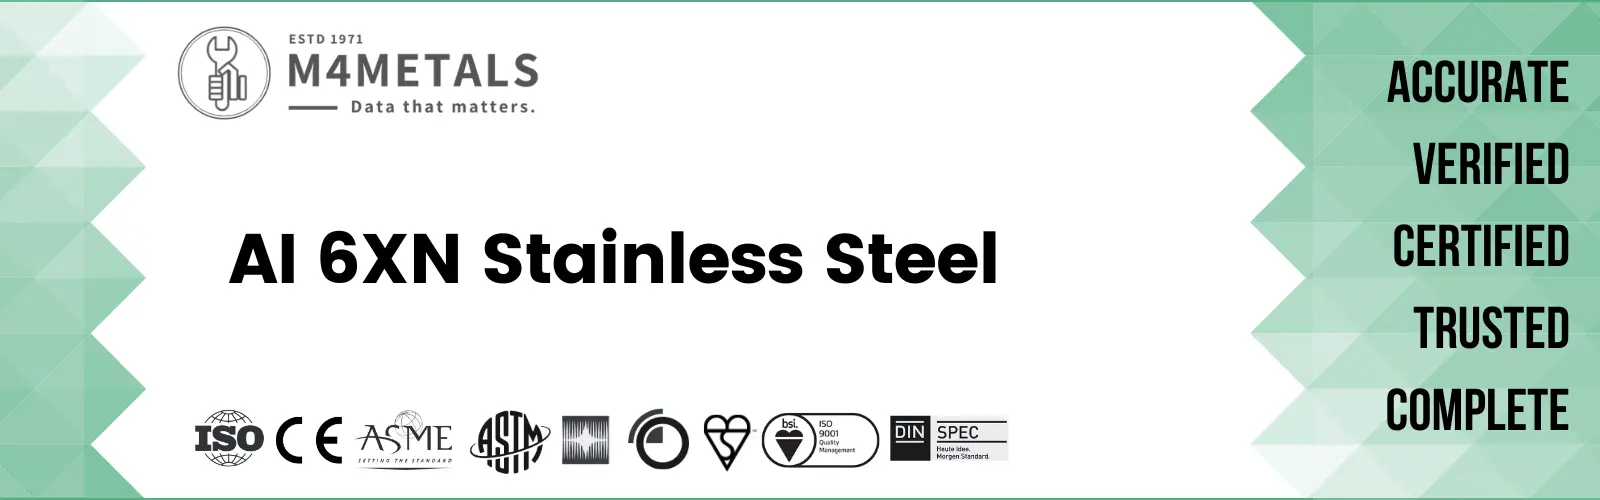 AI-6XN Stainless Steel